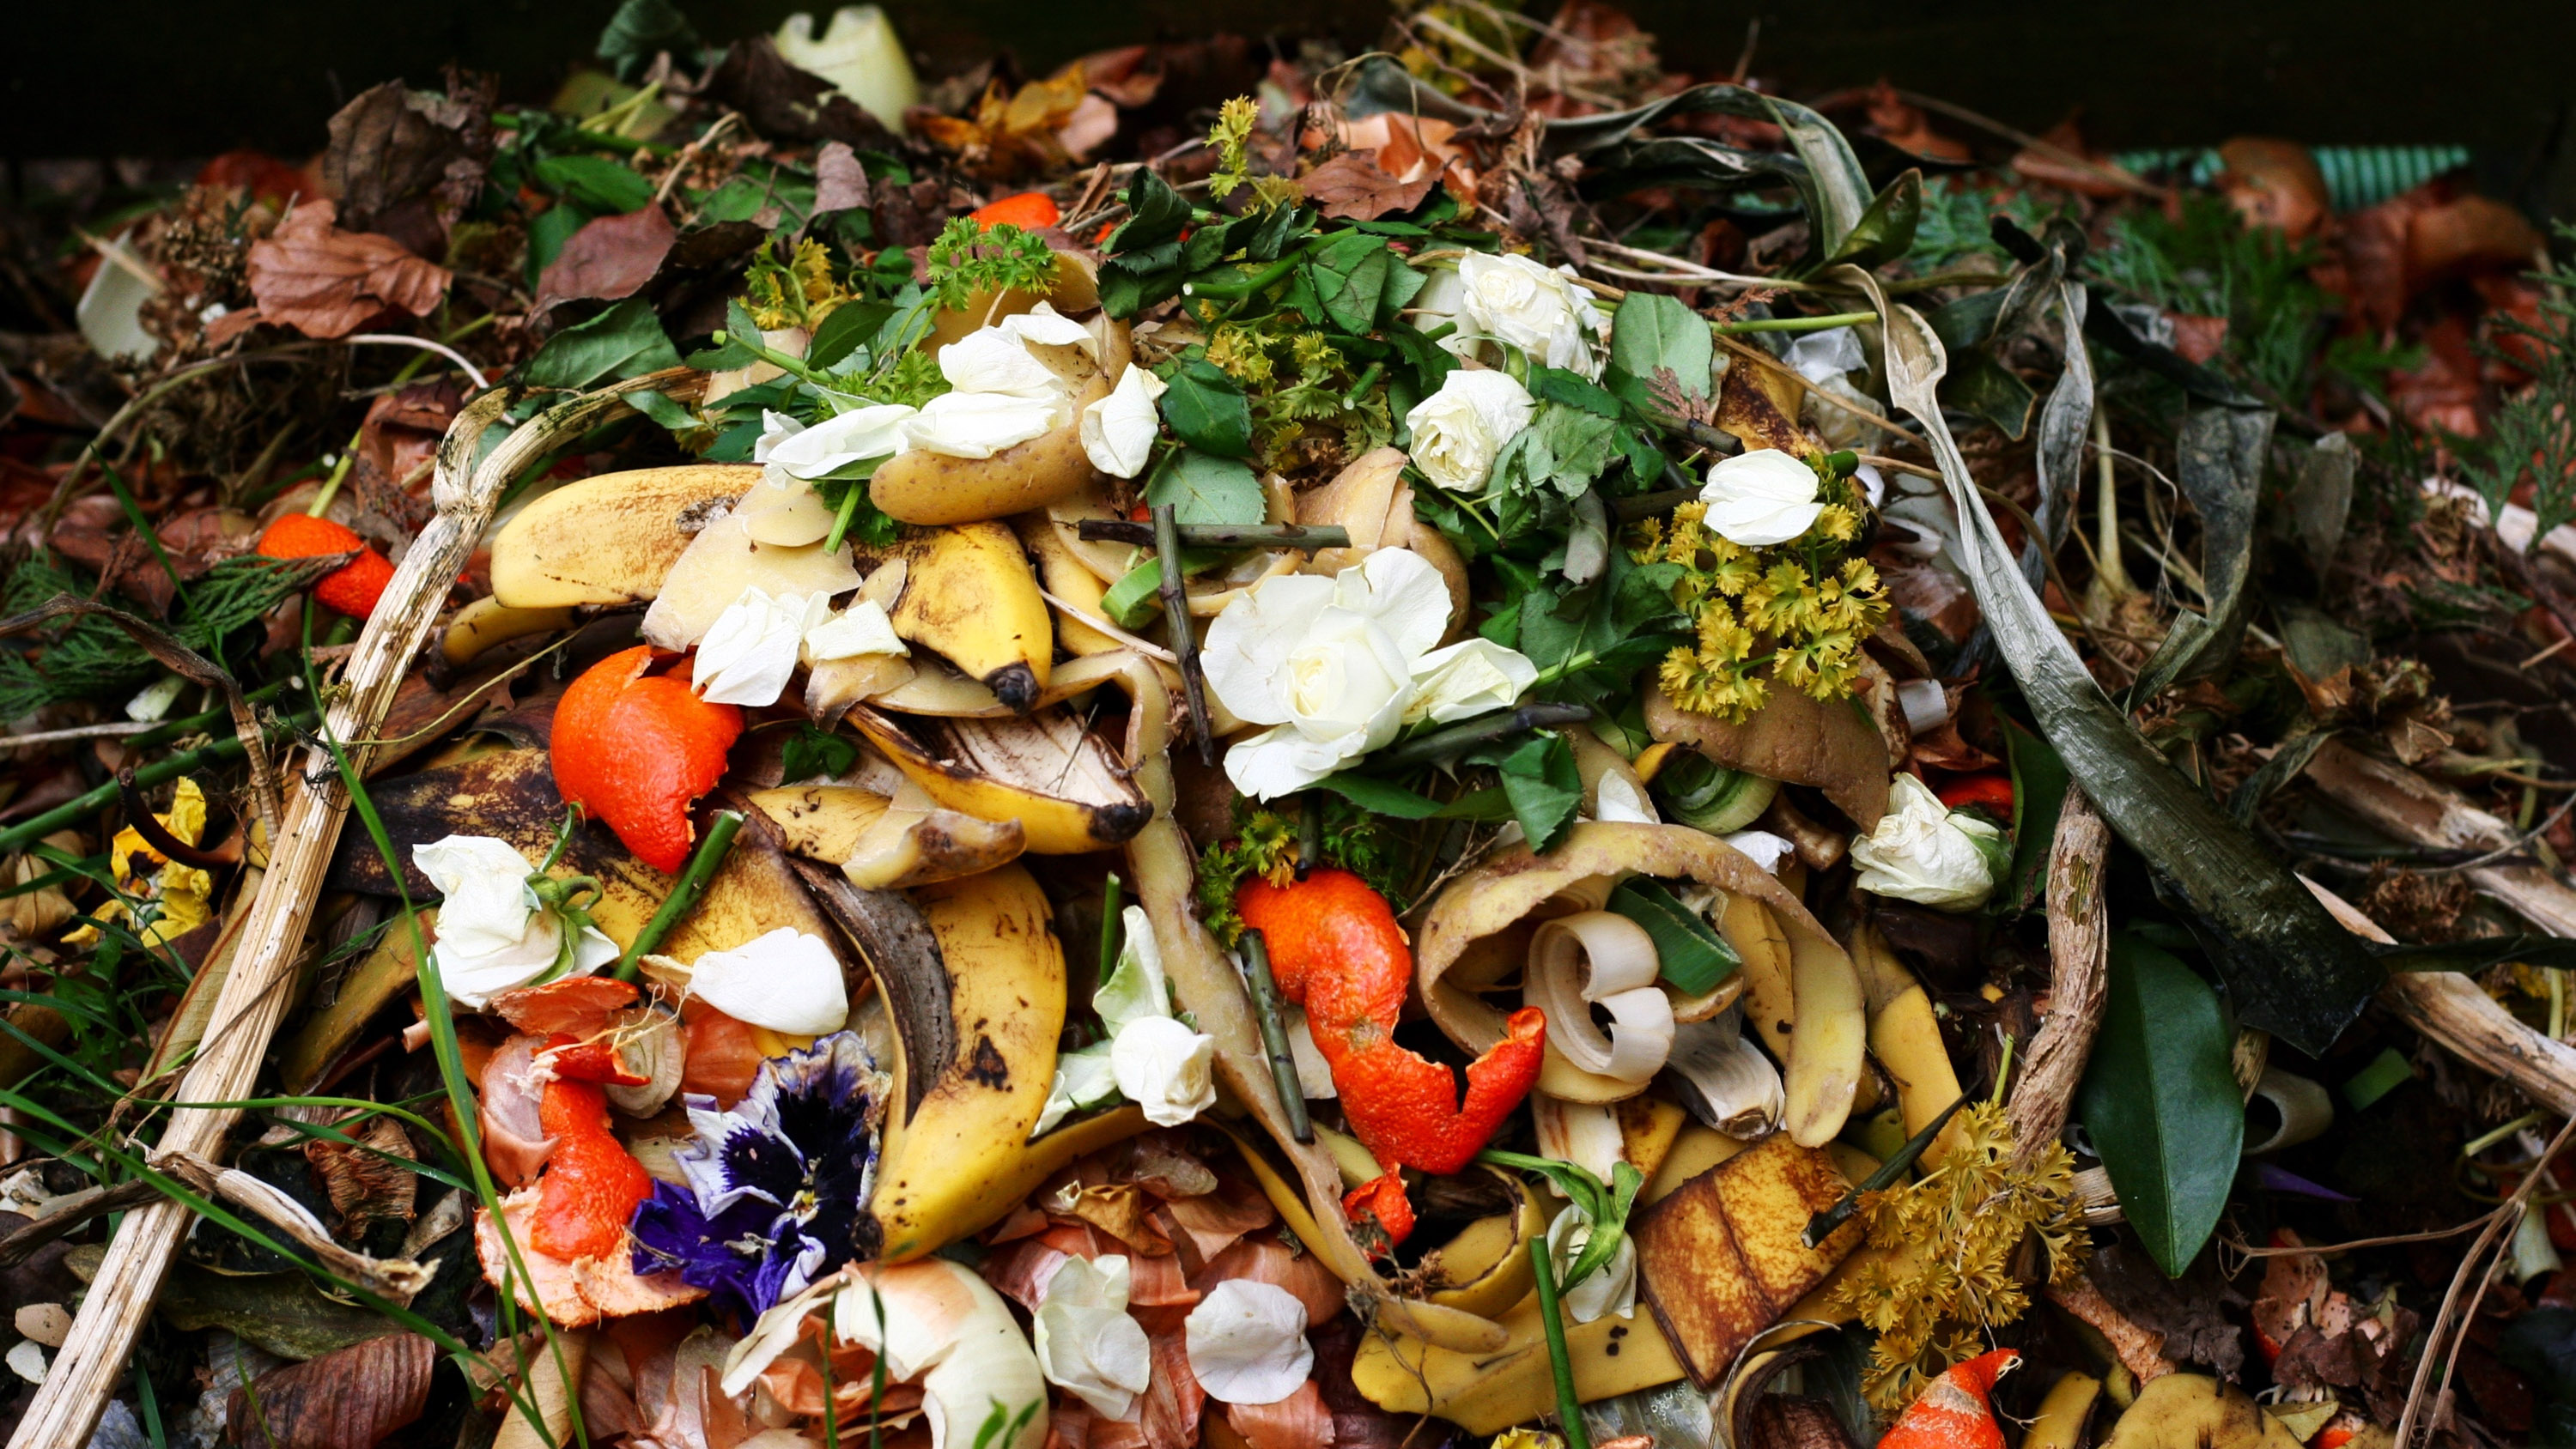 Fresh bio-waste and compost